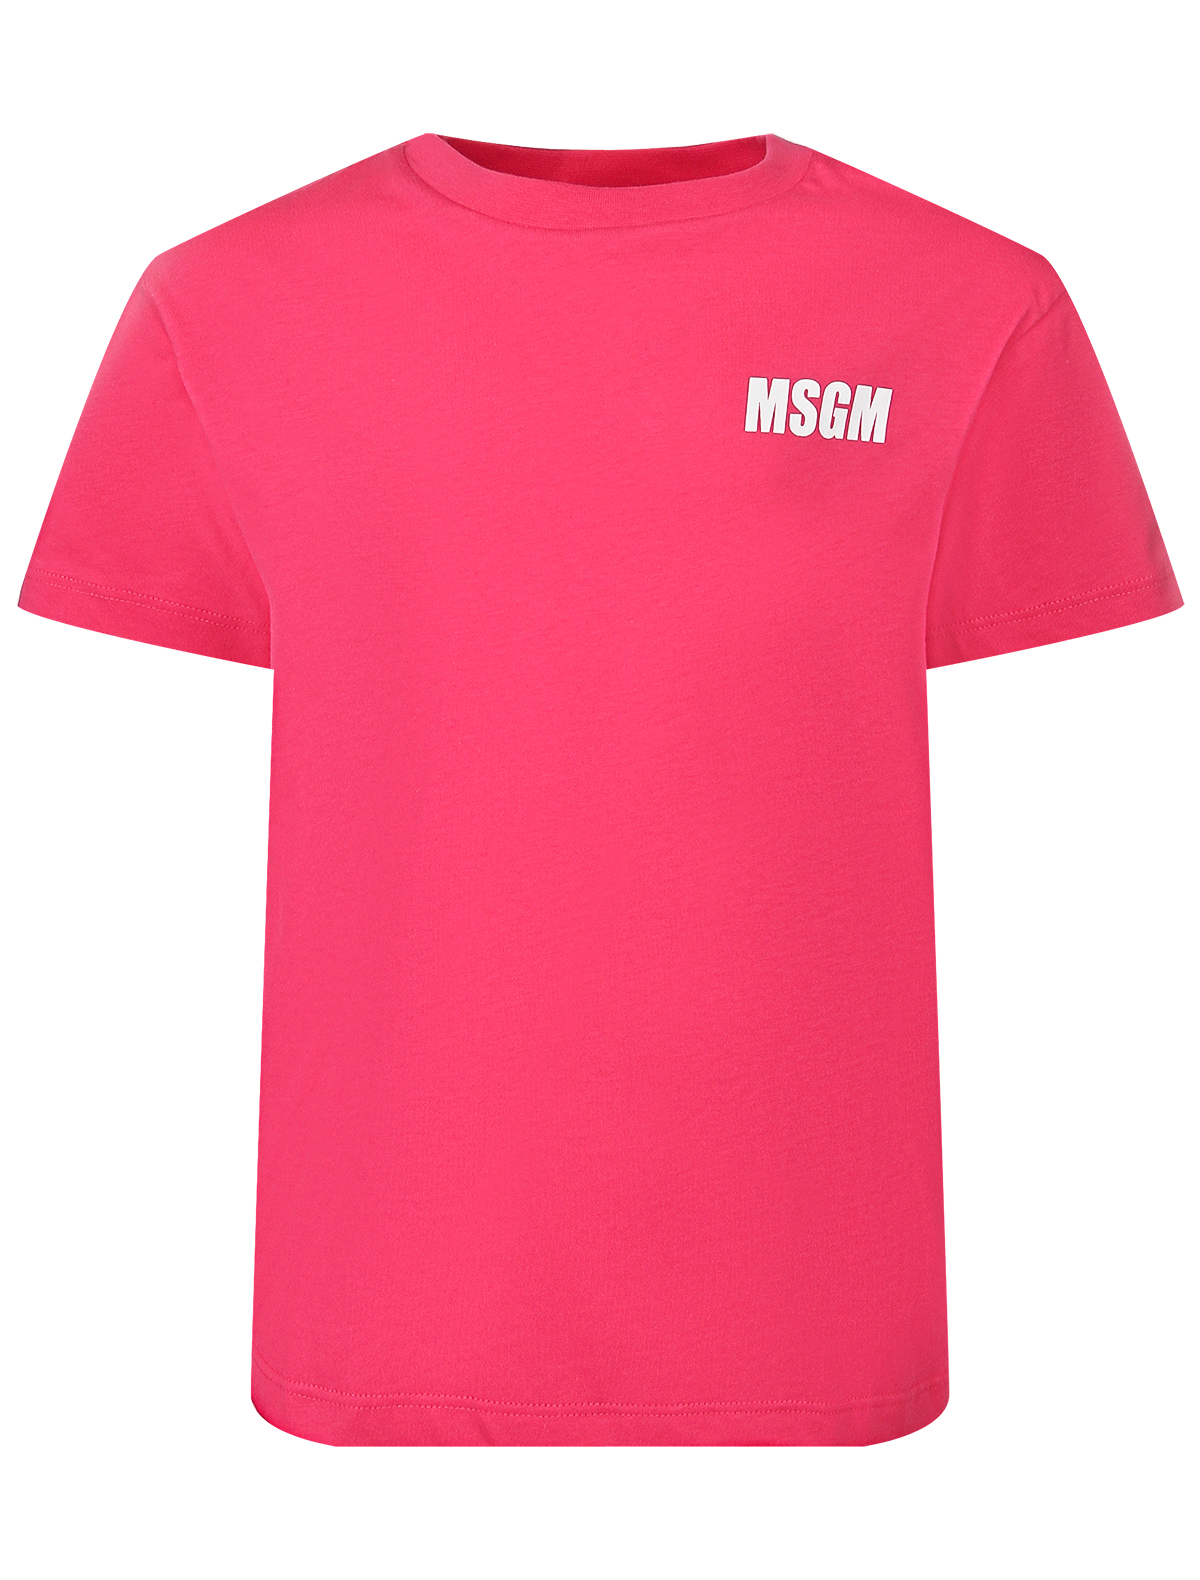 Футболка MSGM 2648562, цвет розовый, размер 11 1134509413203 - фото 1